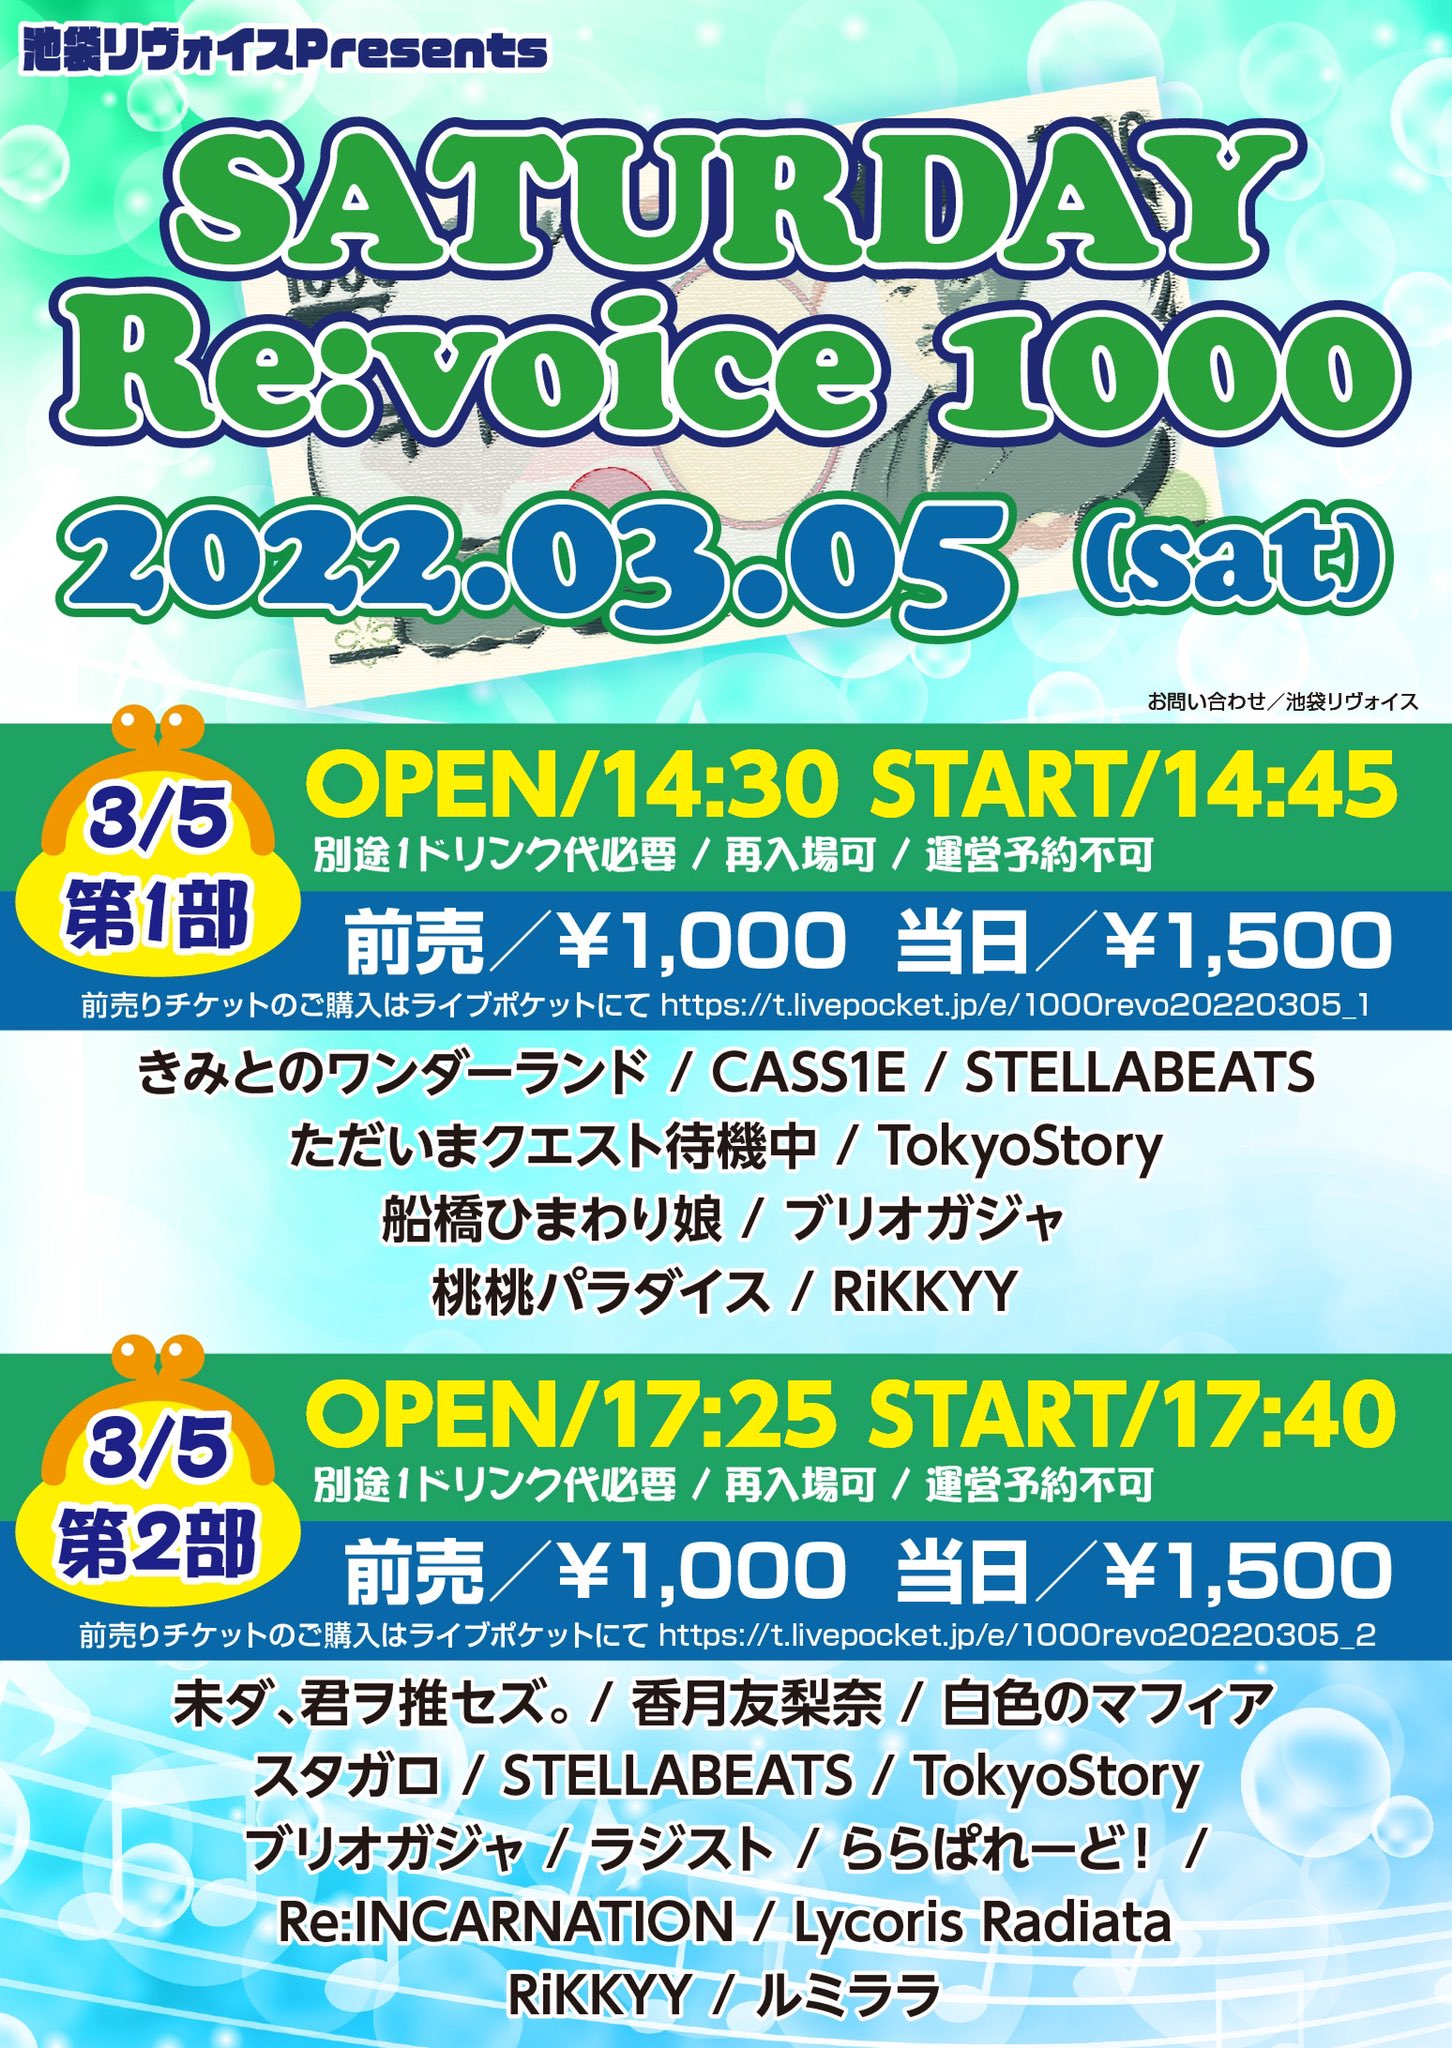 【第一部】SATURDAY Re:voice 1000